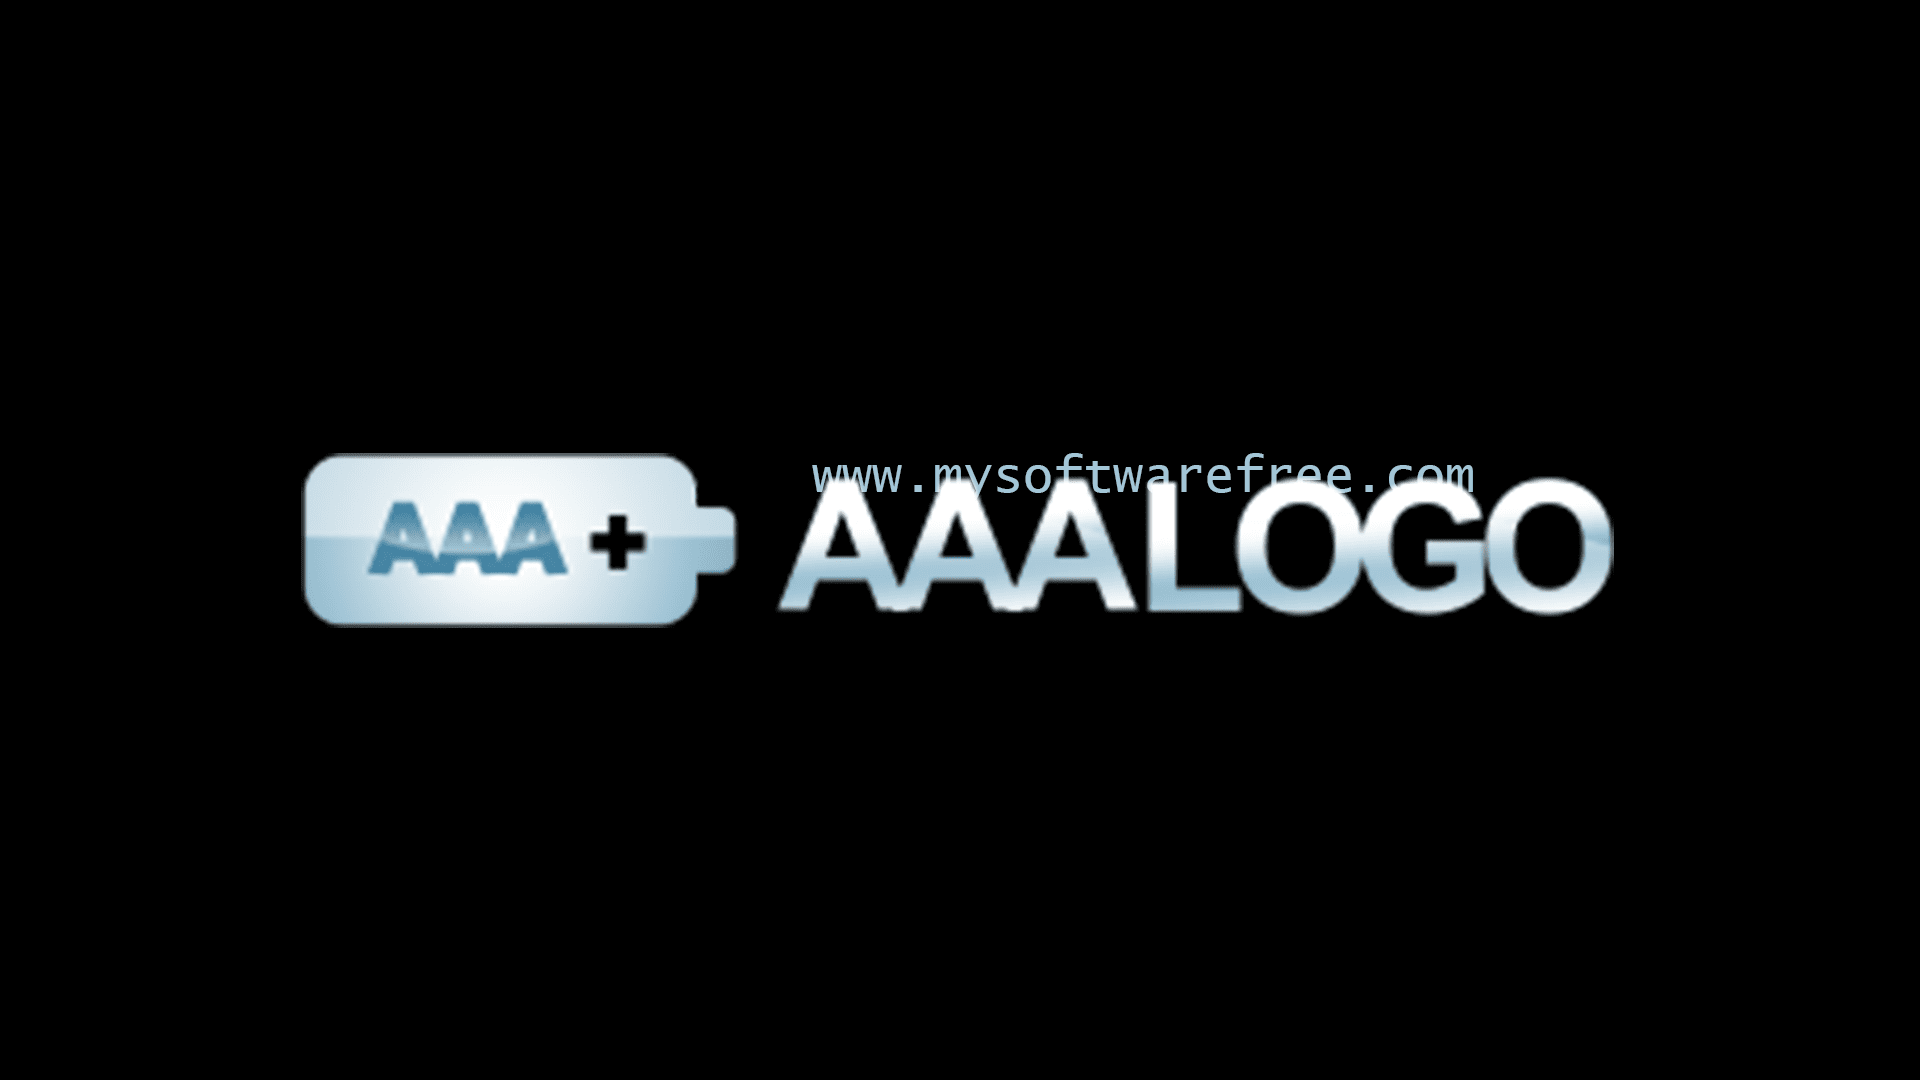 AAA Logo v4.10 Free Download